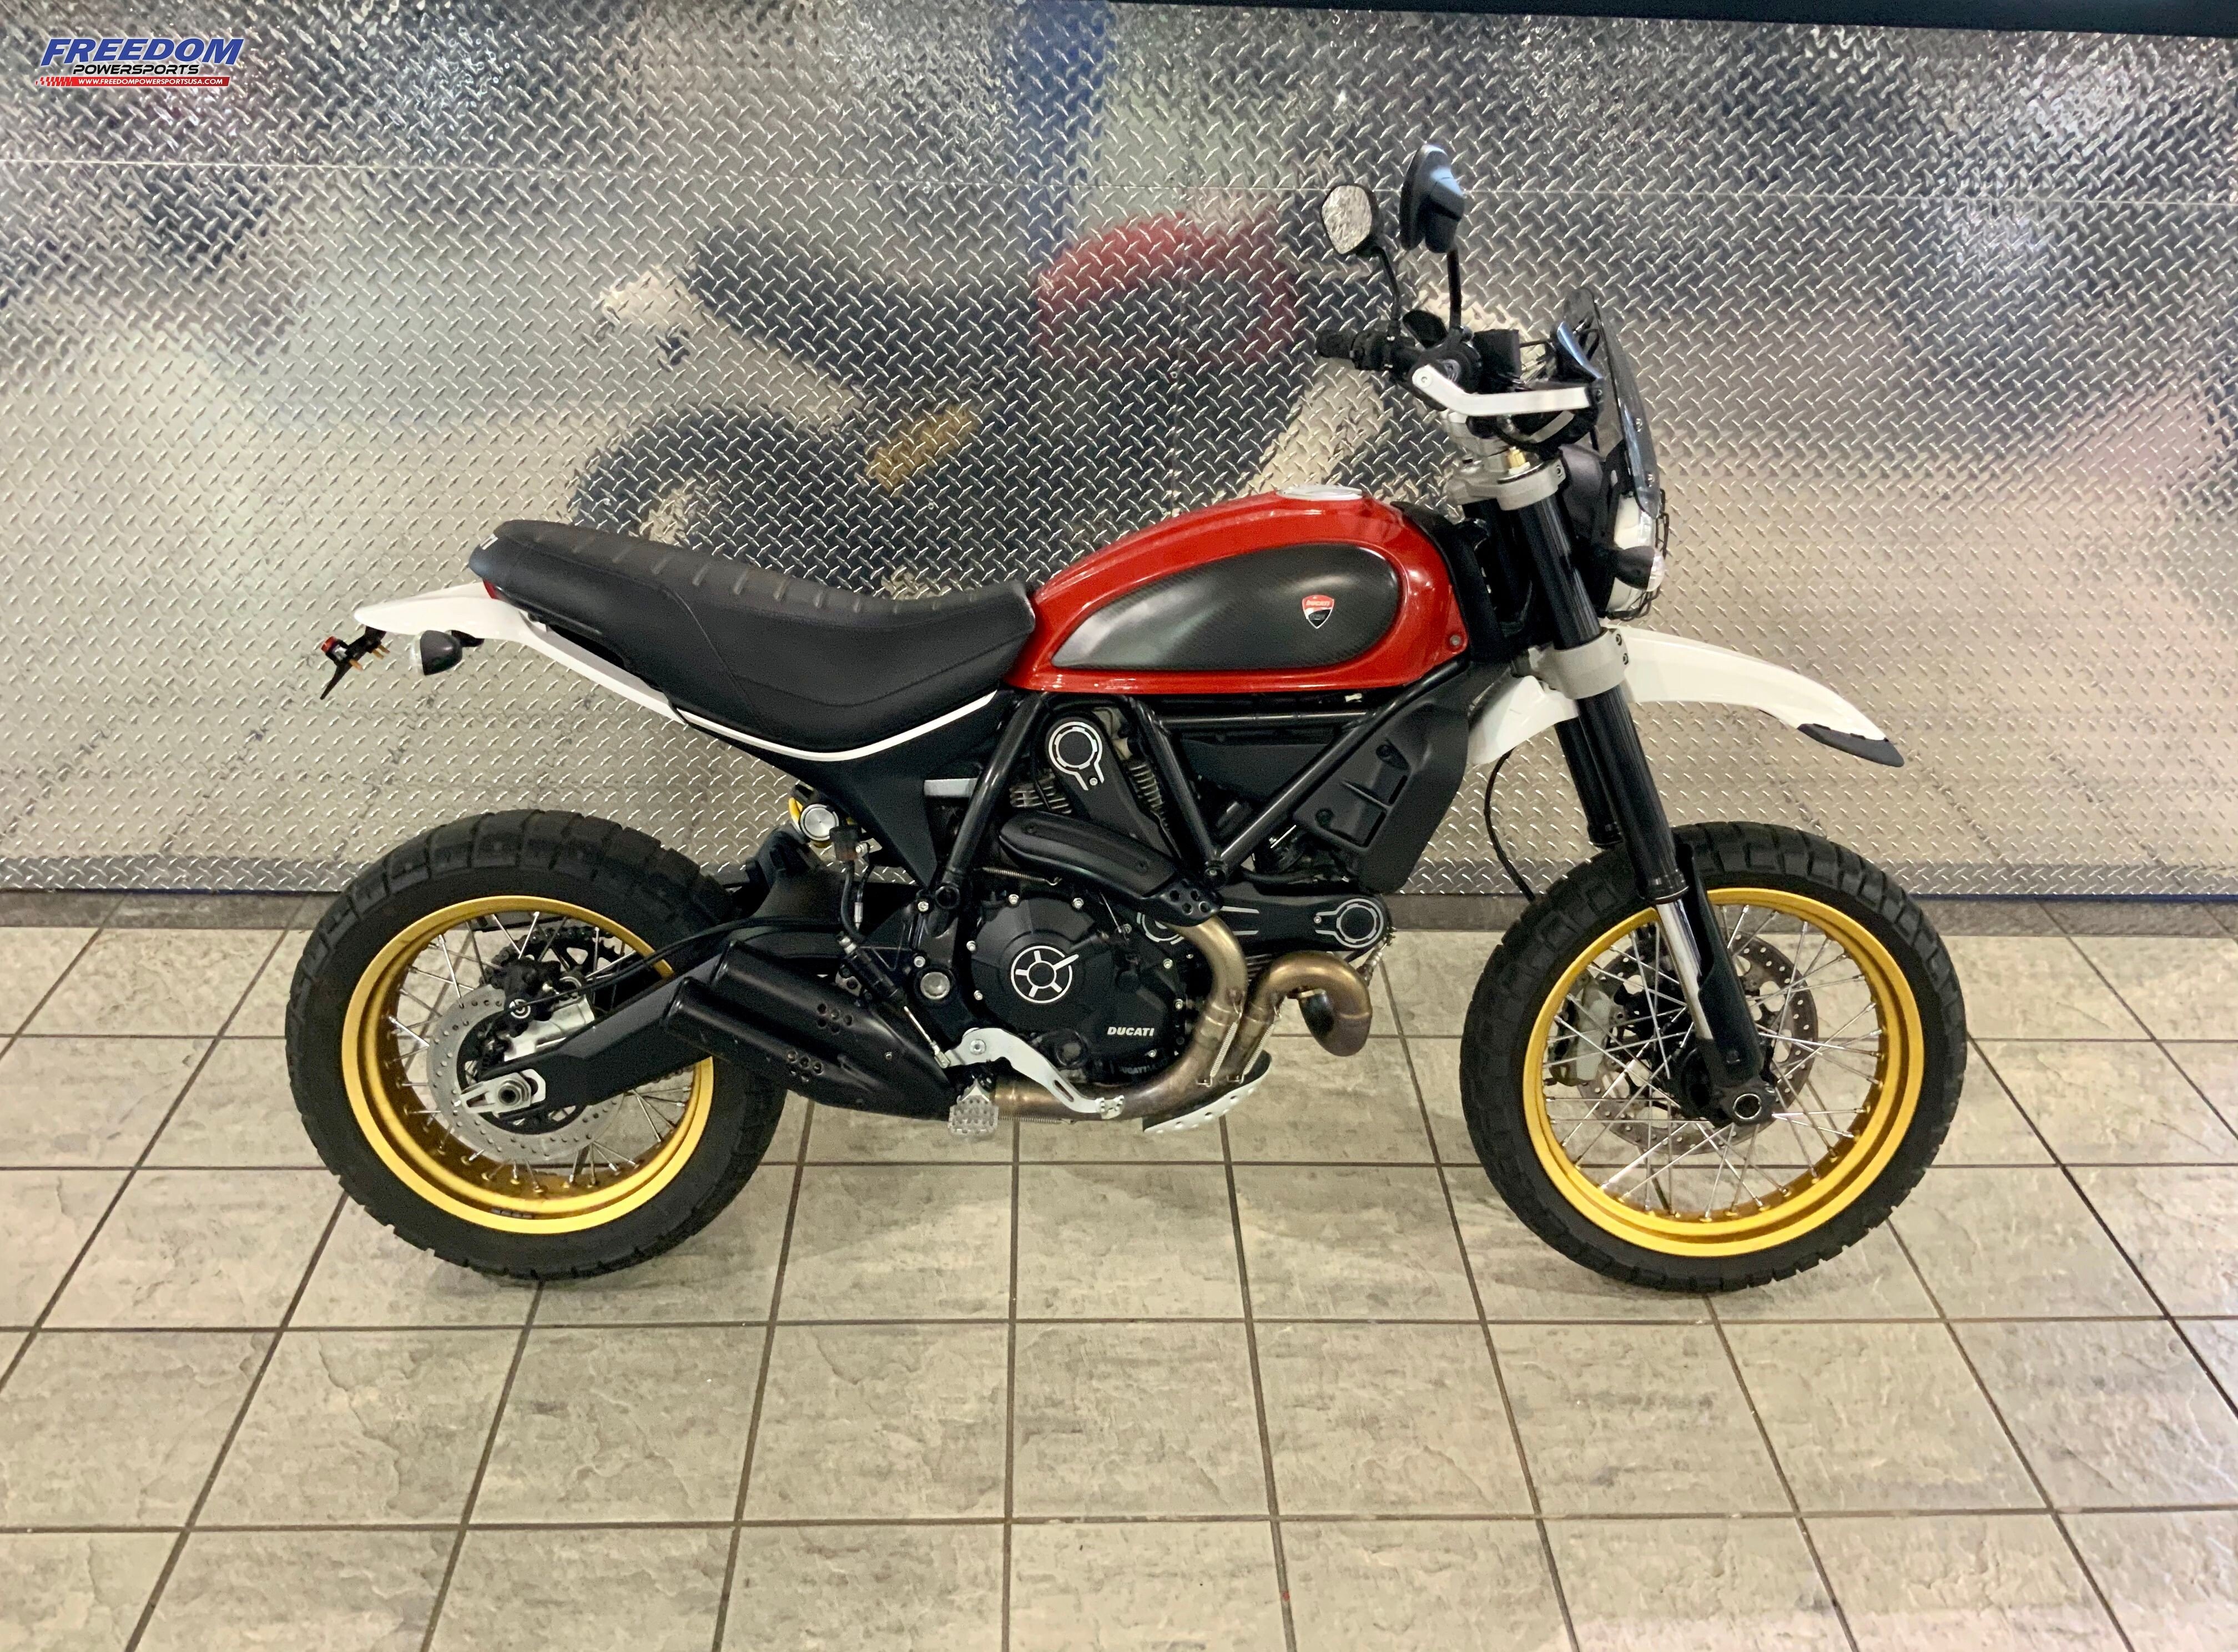 Ducati Scrambler Motorcycle For Sale Off 62 Medpharmres Com